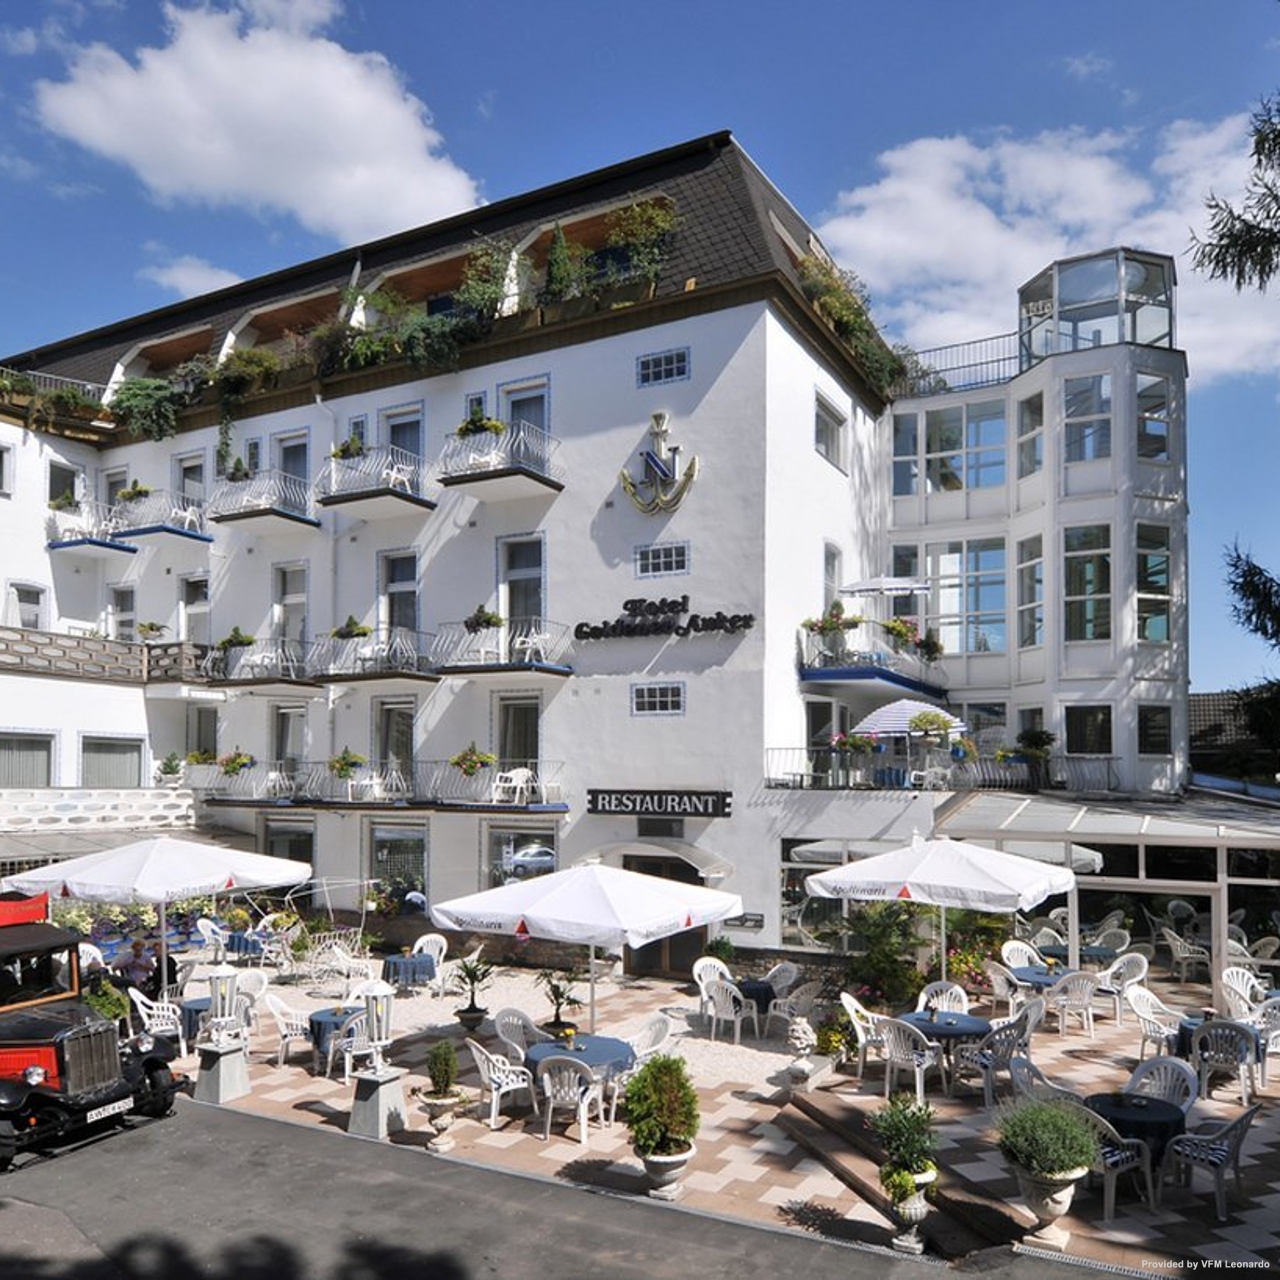 Ringhotel Giffels Goldener Anker - 4 HRS star hotel in Bad Neuenahr- Ahrweiler (Rhineland-Palatinate)